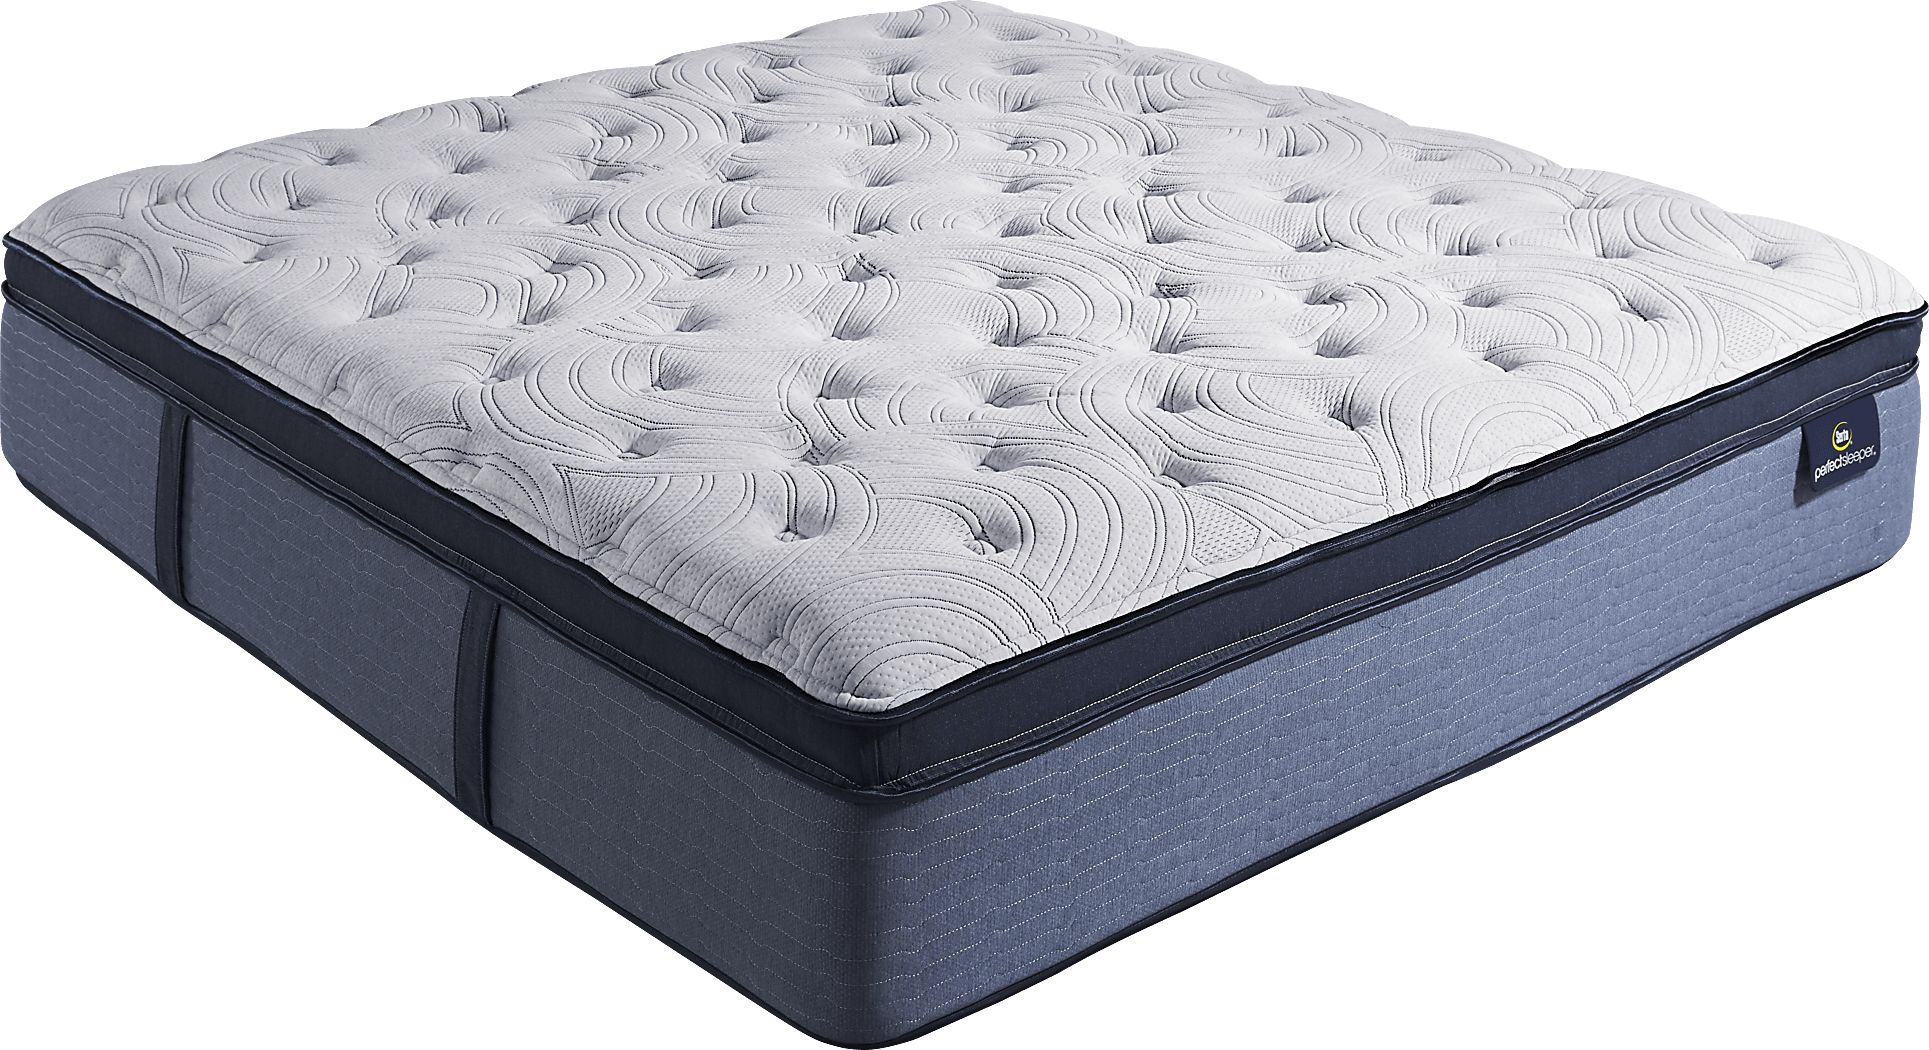 serta perfect sleeper king mattress and box spring